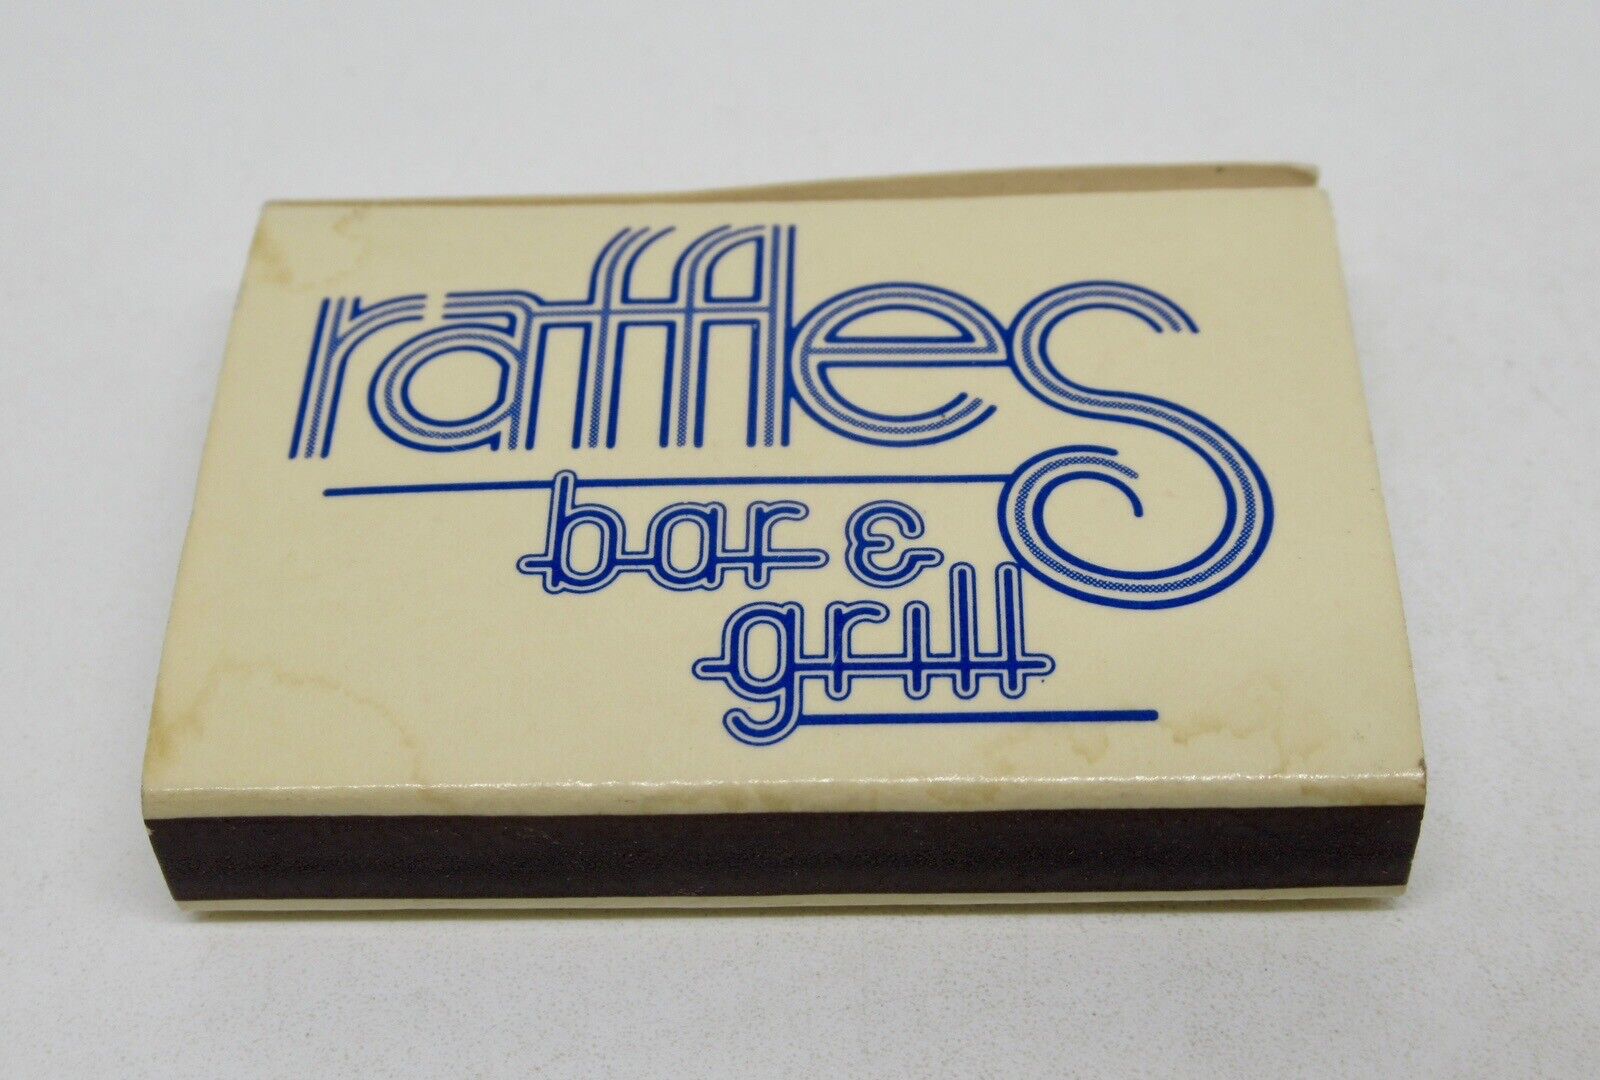 Raffles Bar & Grill Miami - Ft. Myers Florida - Atlanta Matchbox / Matchbook